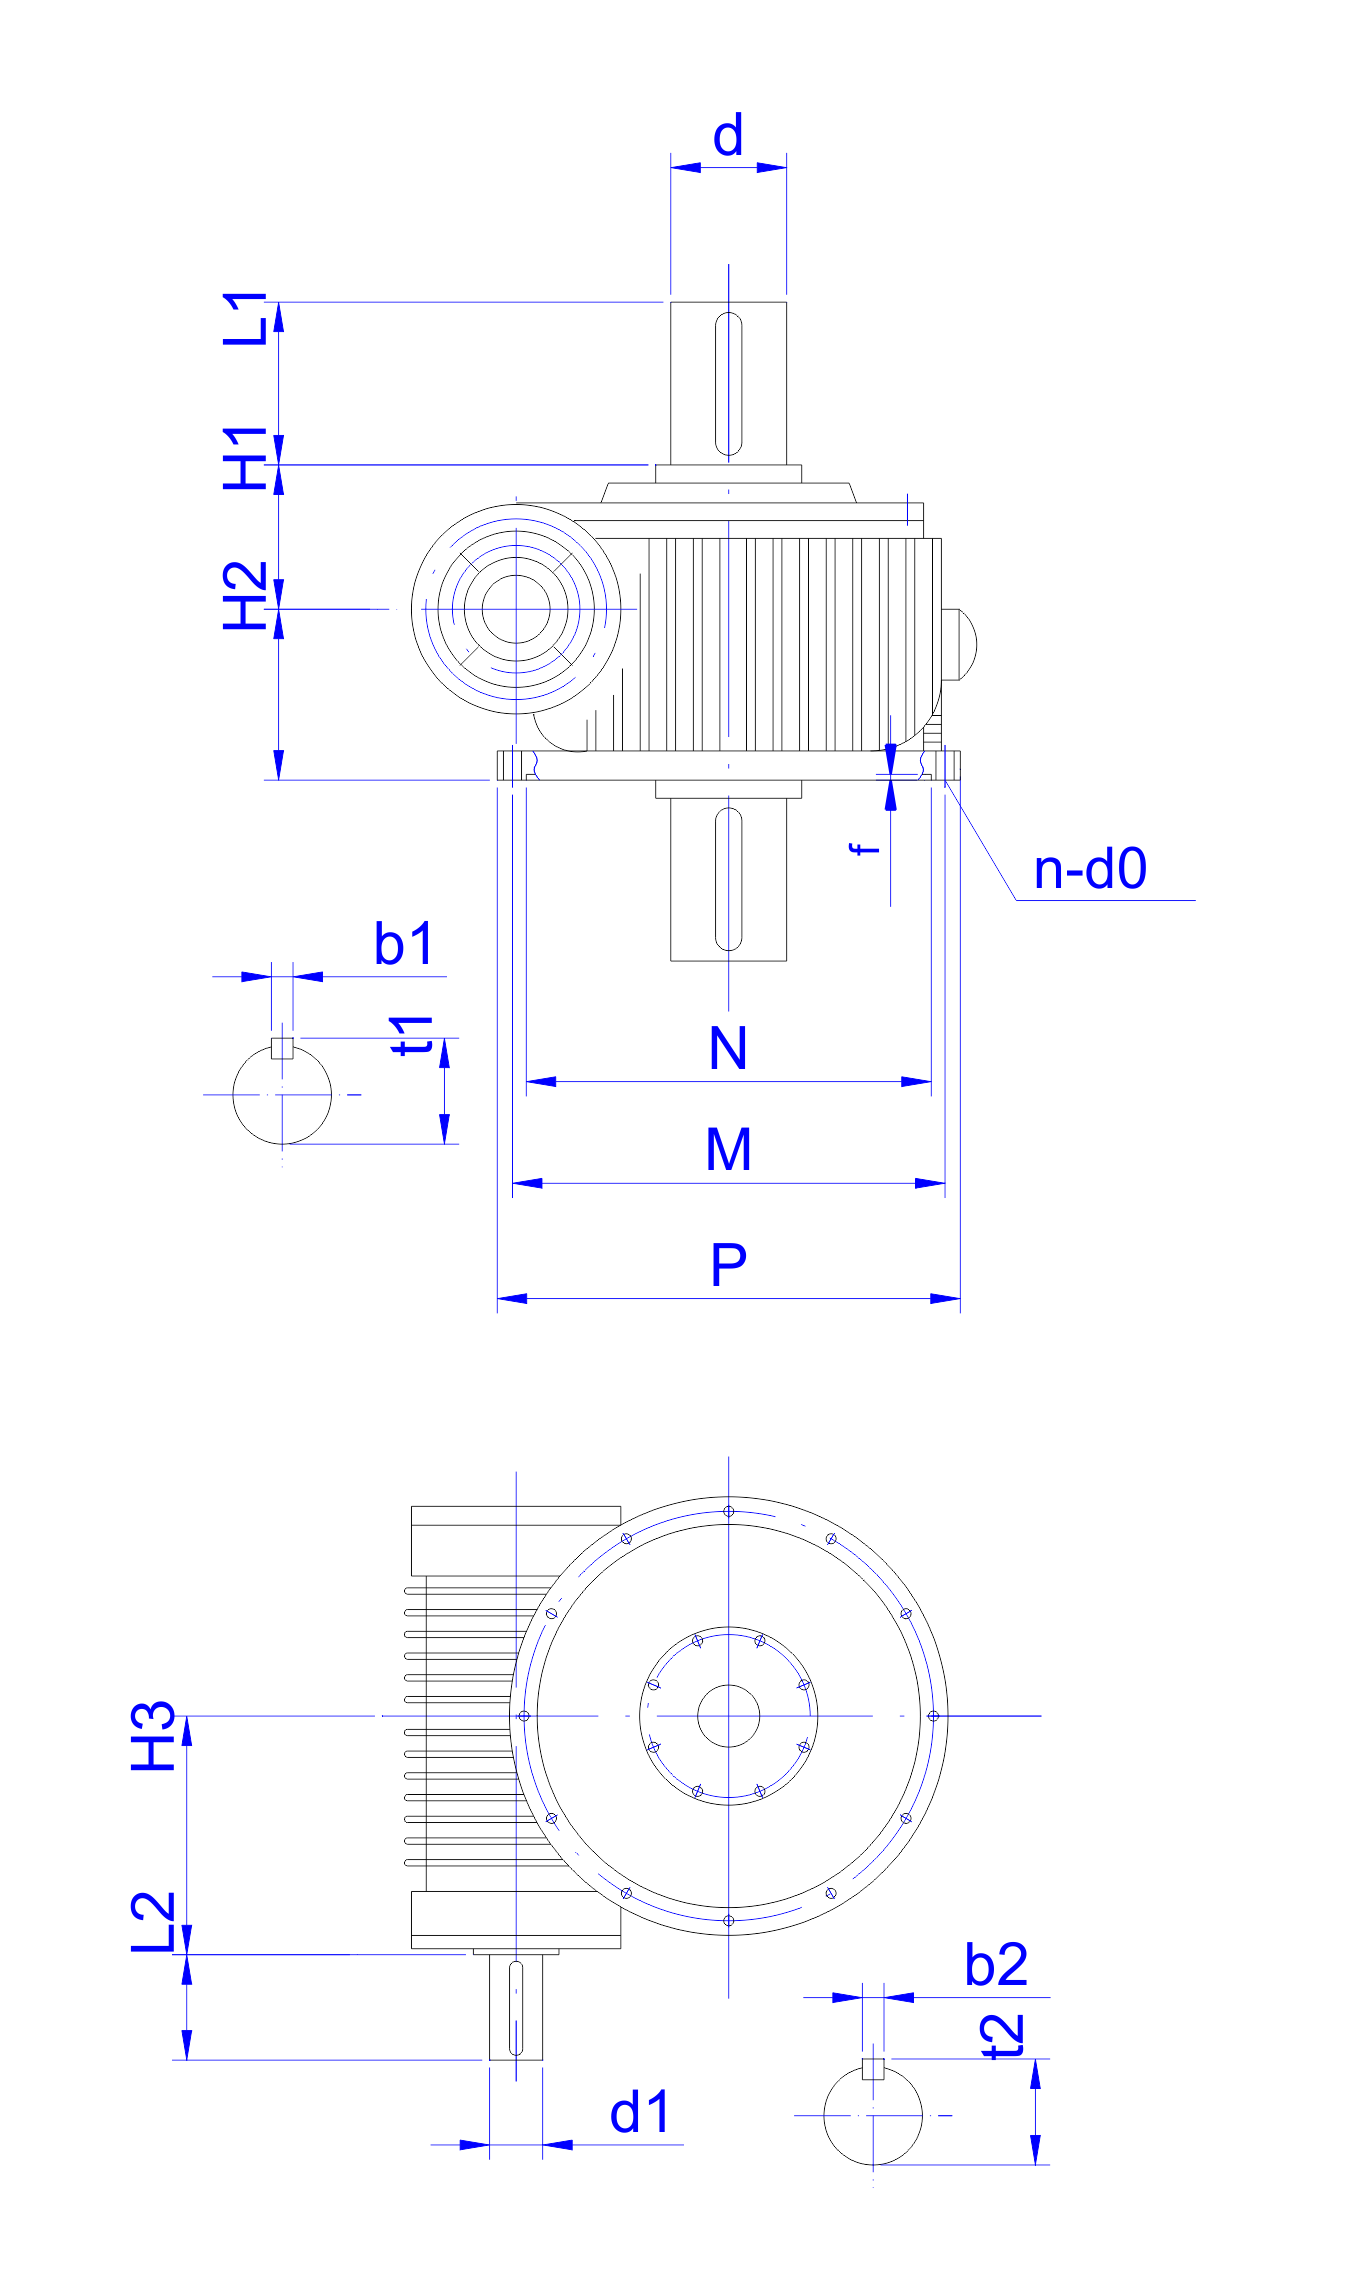   WHC系列正交軸蝸輪蝸桿減速機設計圖